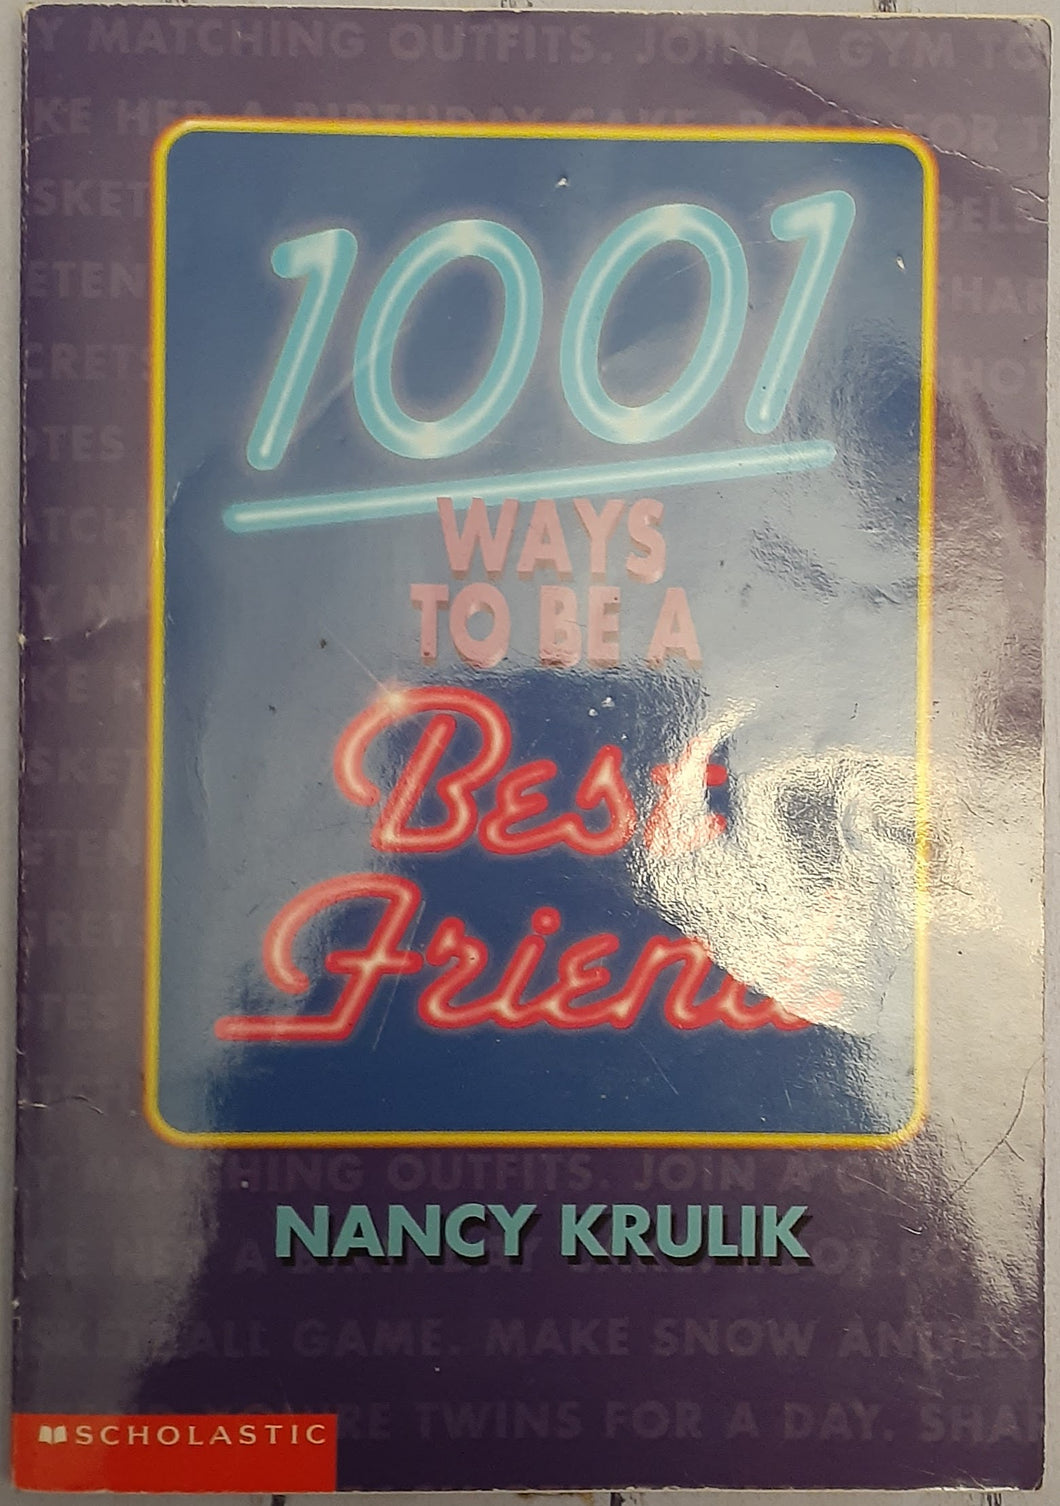 1001 Ways To Be A Best Friend